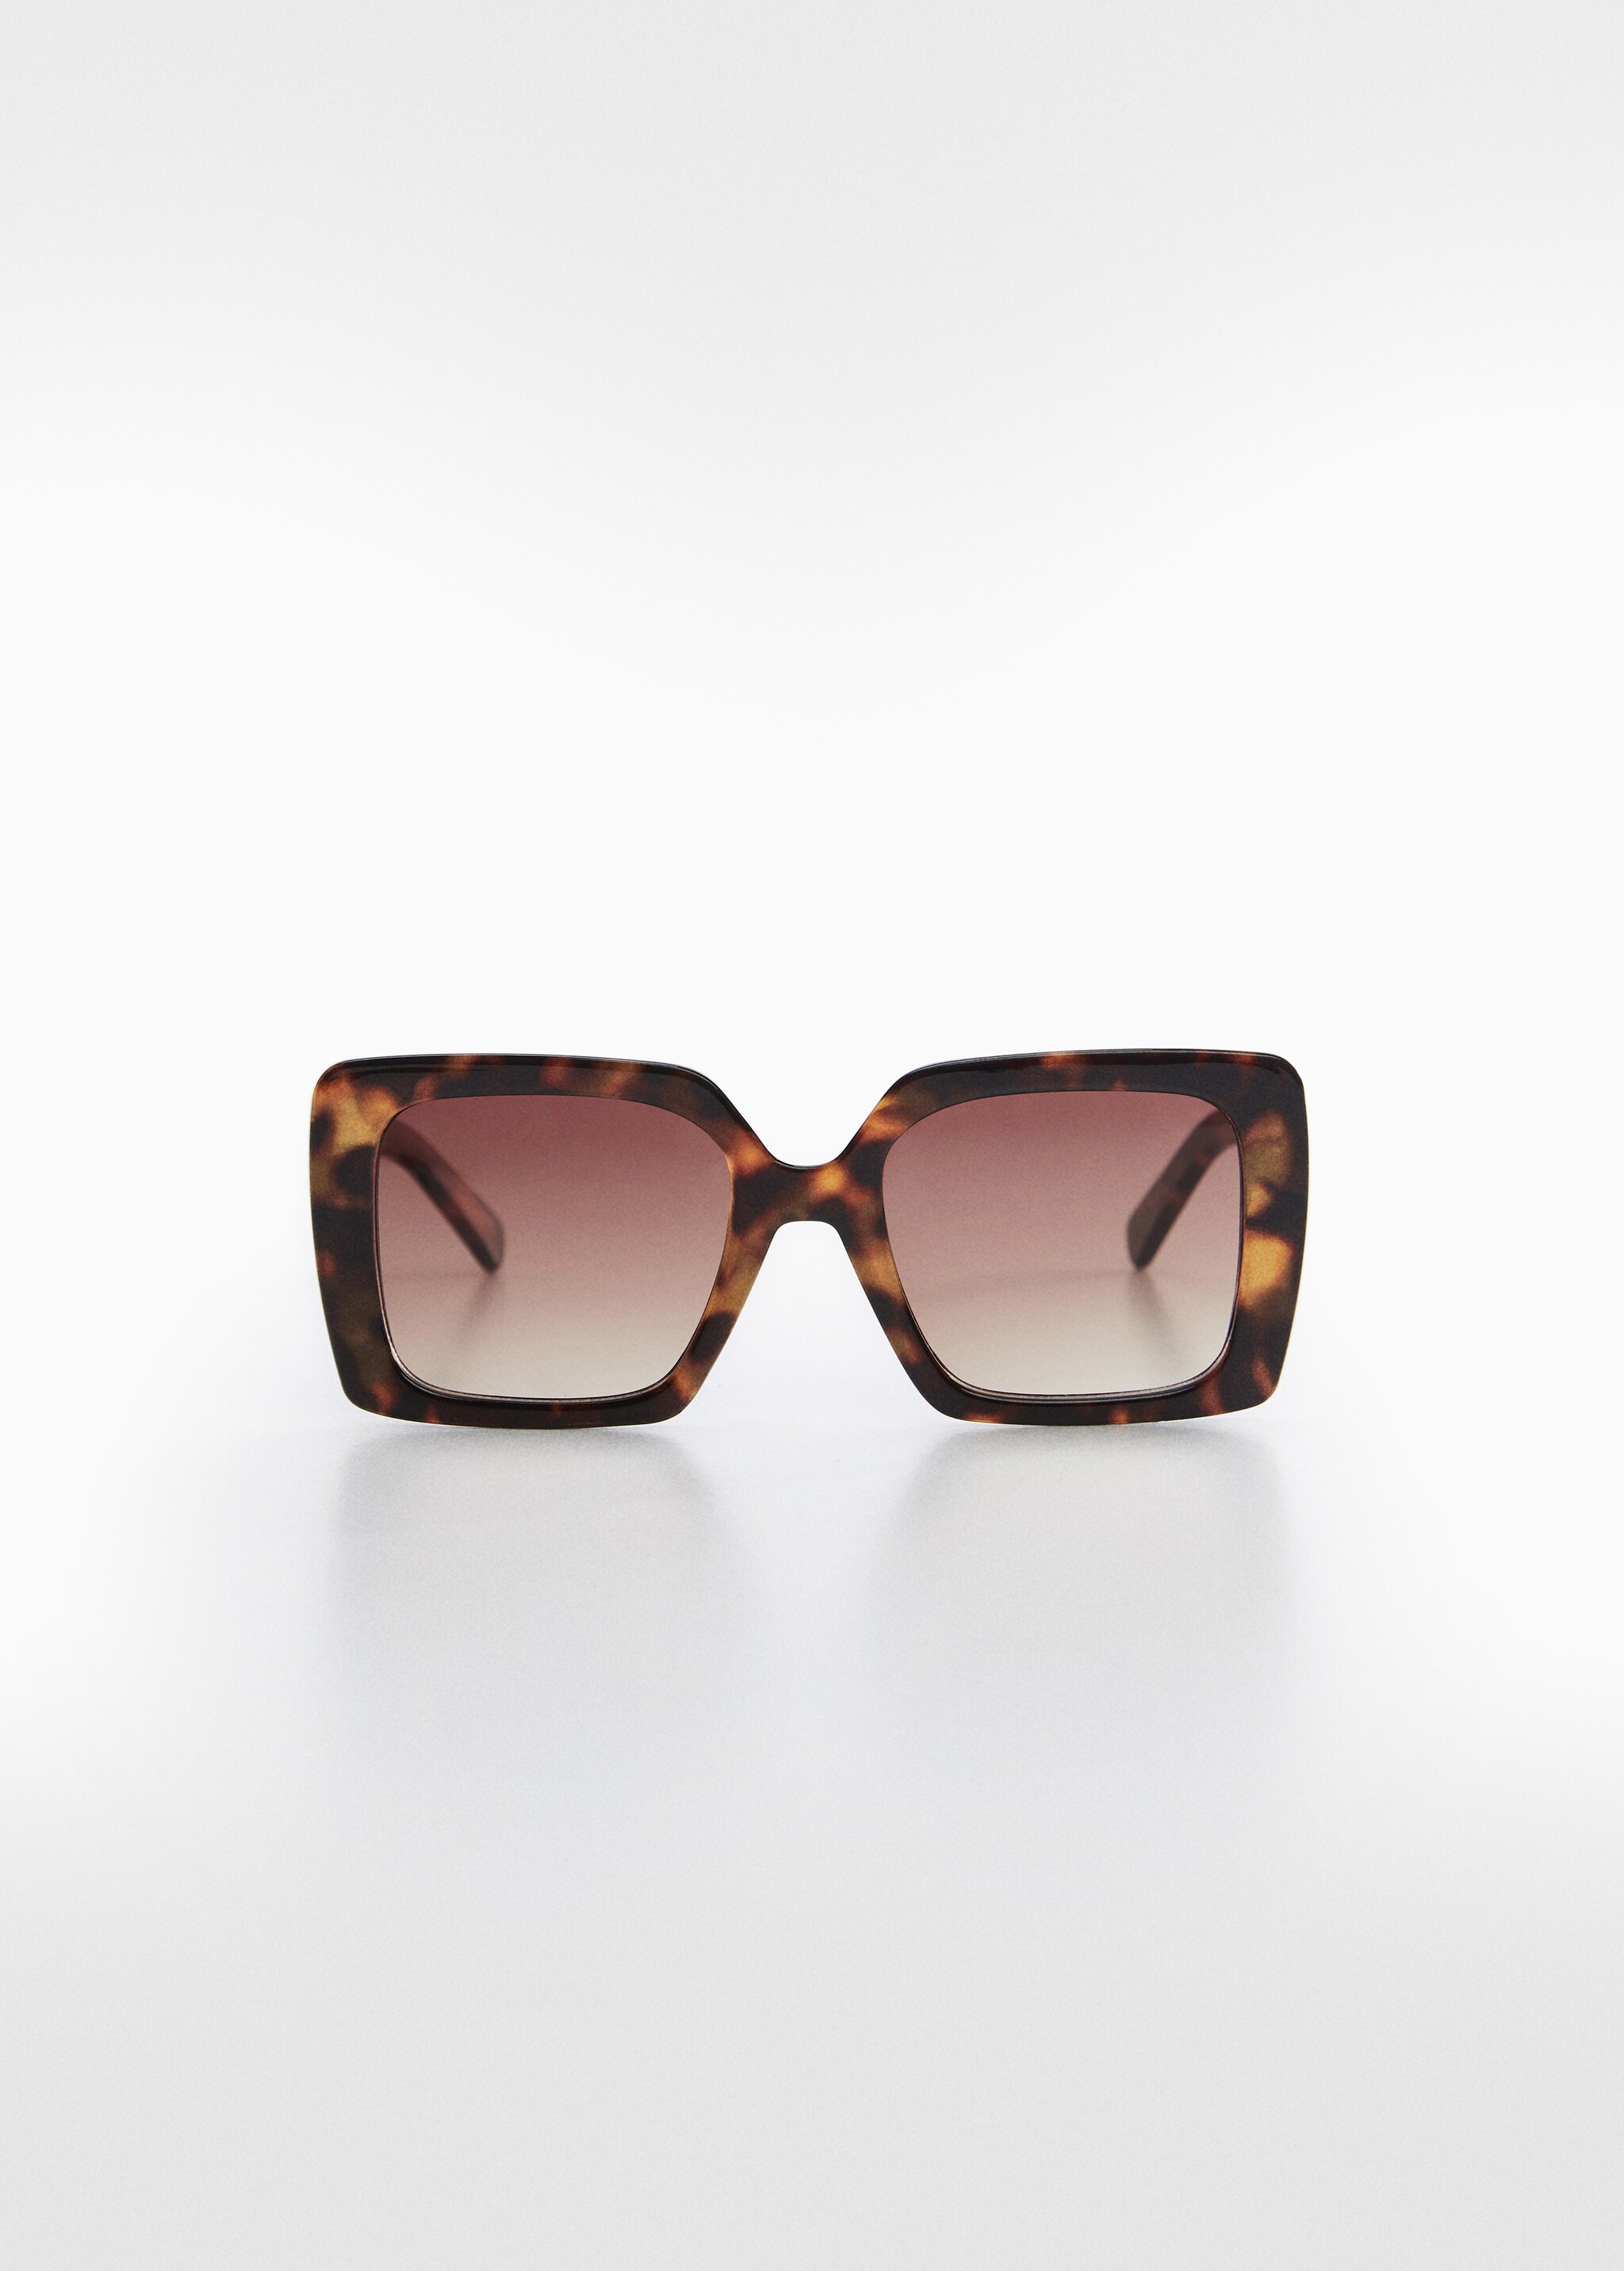 Tortoiseshell square sunglasses - Article without model